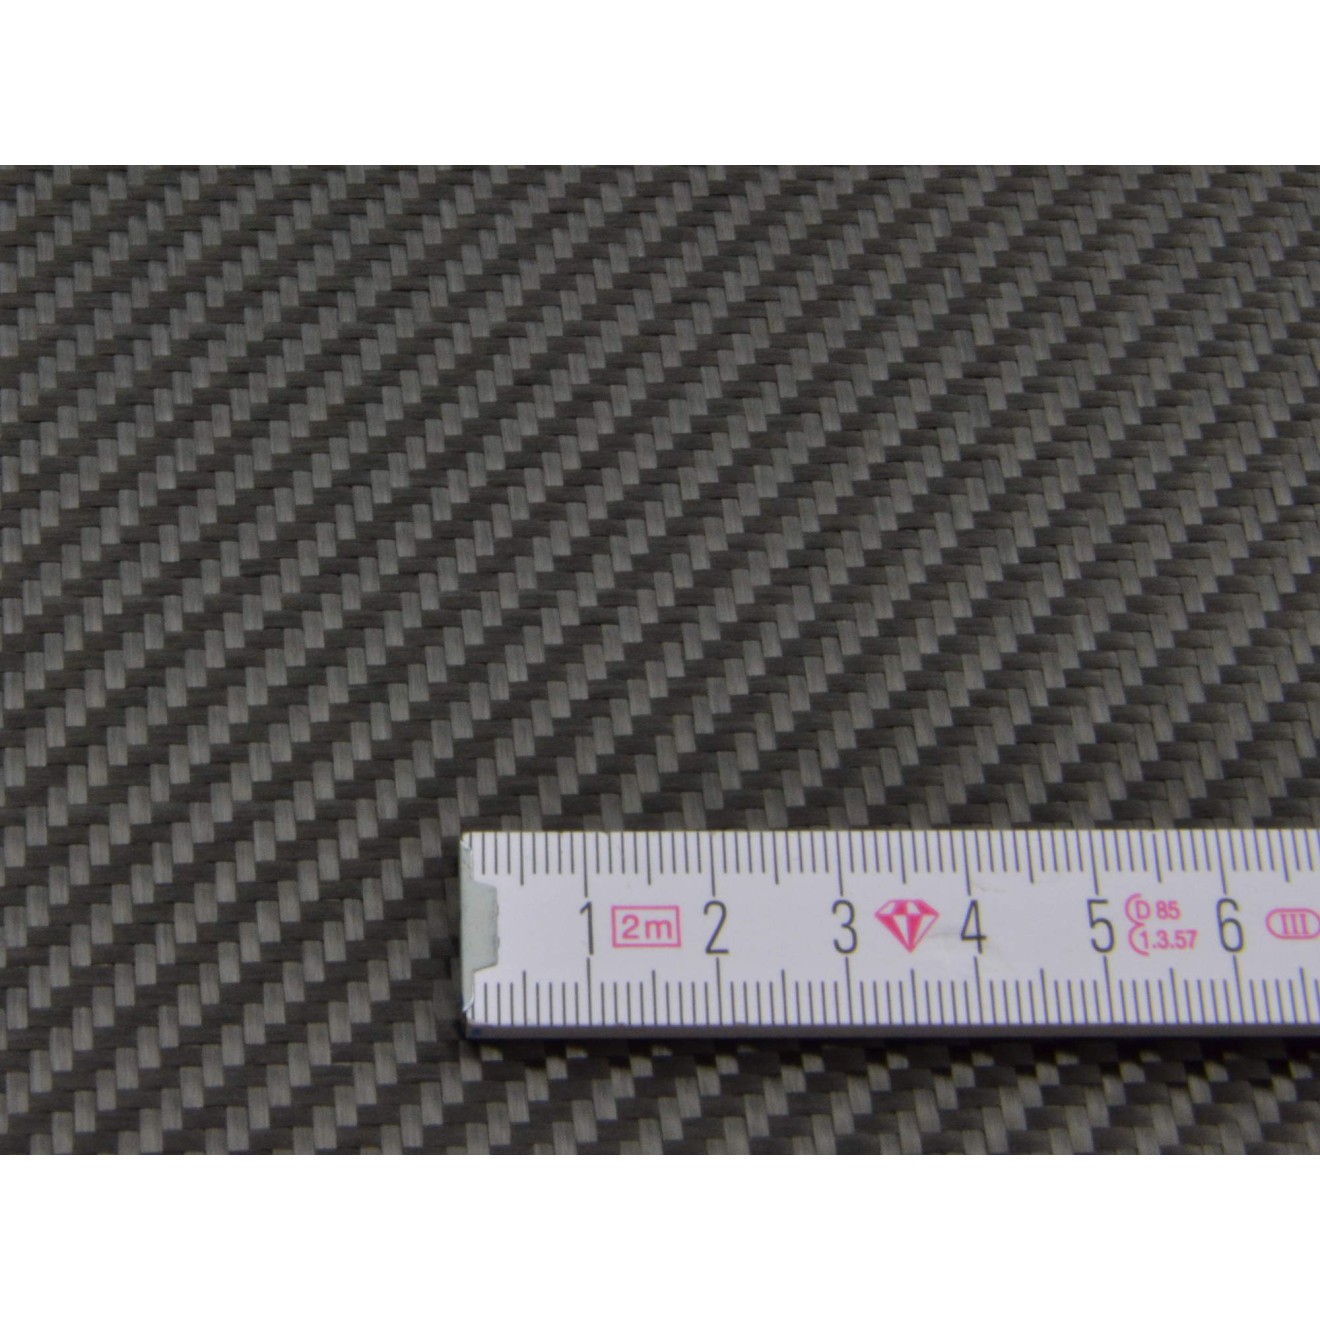 Woven carbon fiber fabric 3K 245g/m² twill2/2, roll 25m